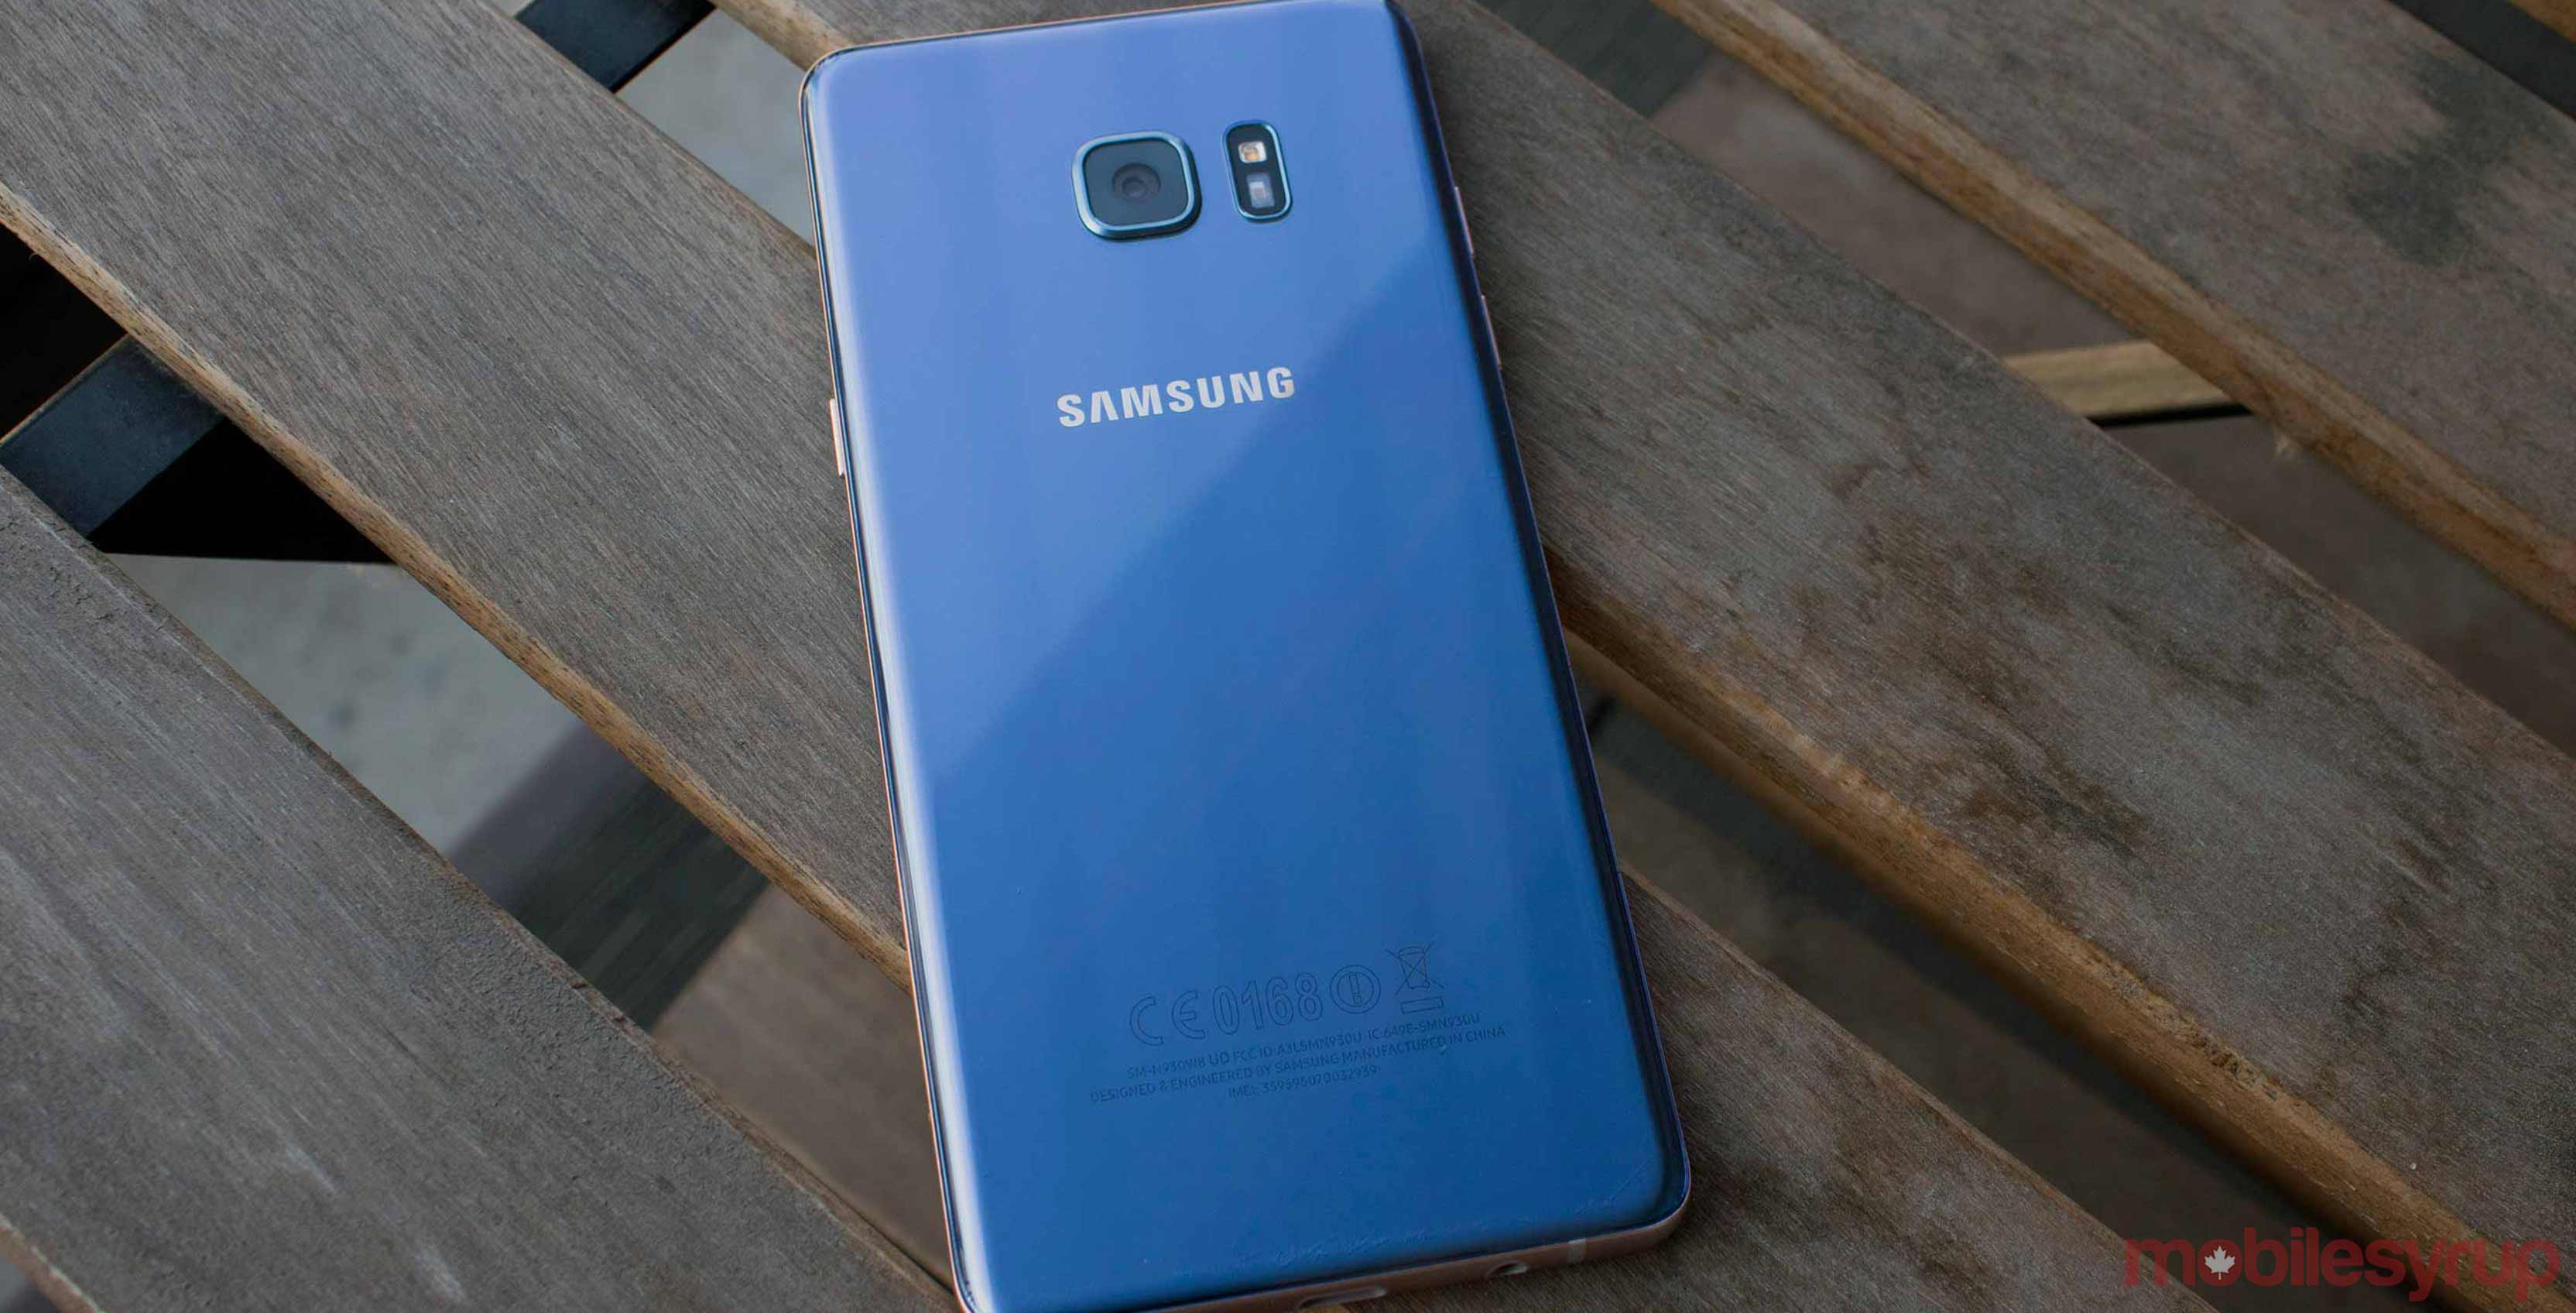 Rear of Samsung Galaxy Note 7